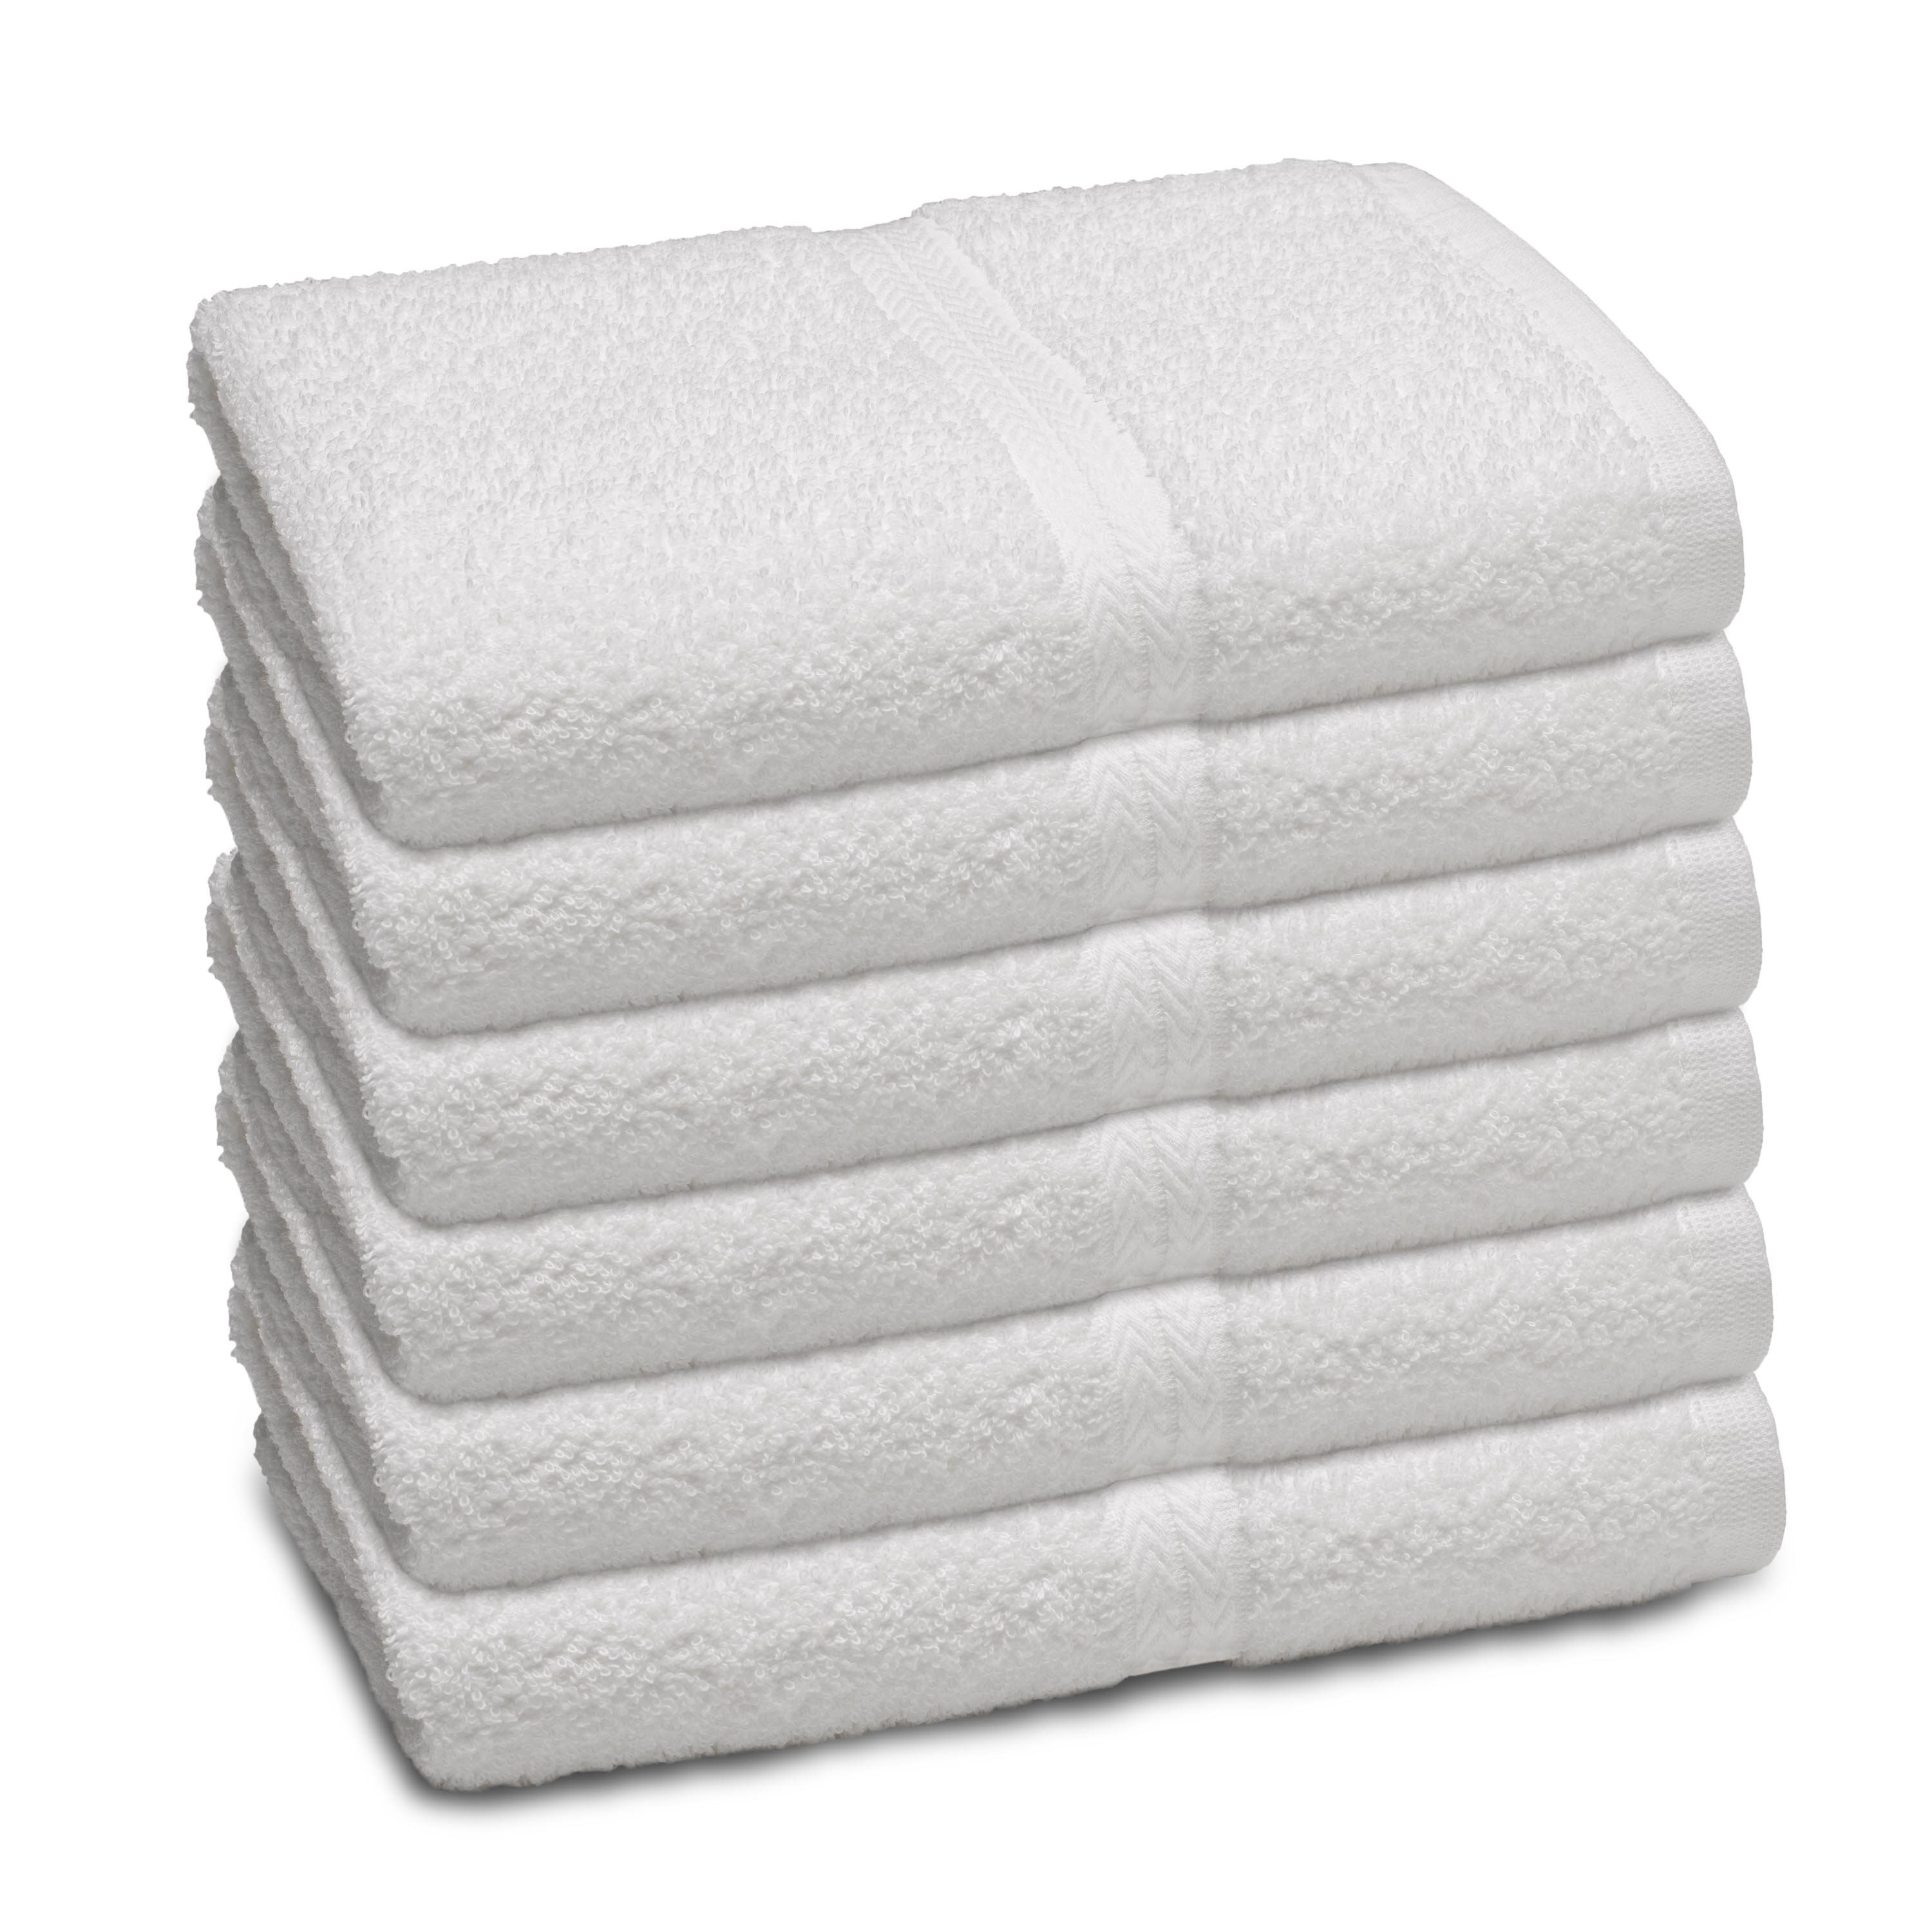 ASHTON 100% Egyptian Cotton White Soft Hotel Quality Towel Hand Towel Bath Sheet